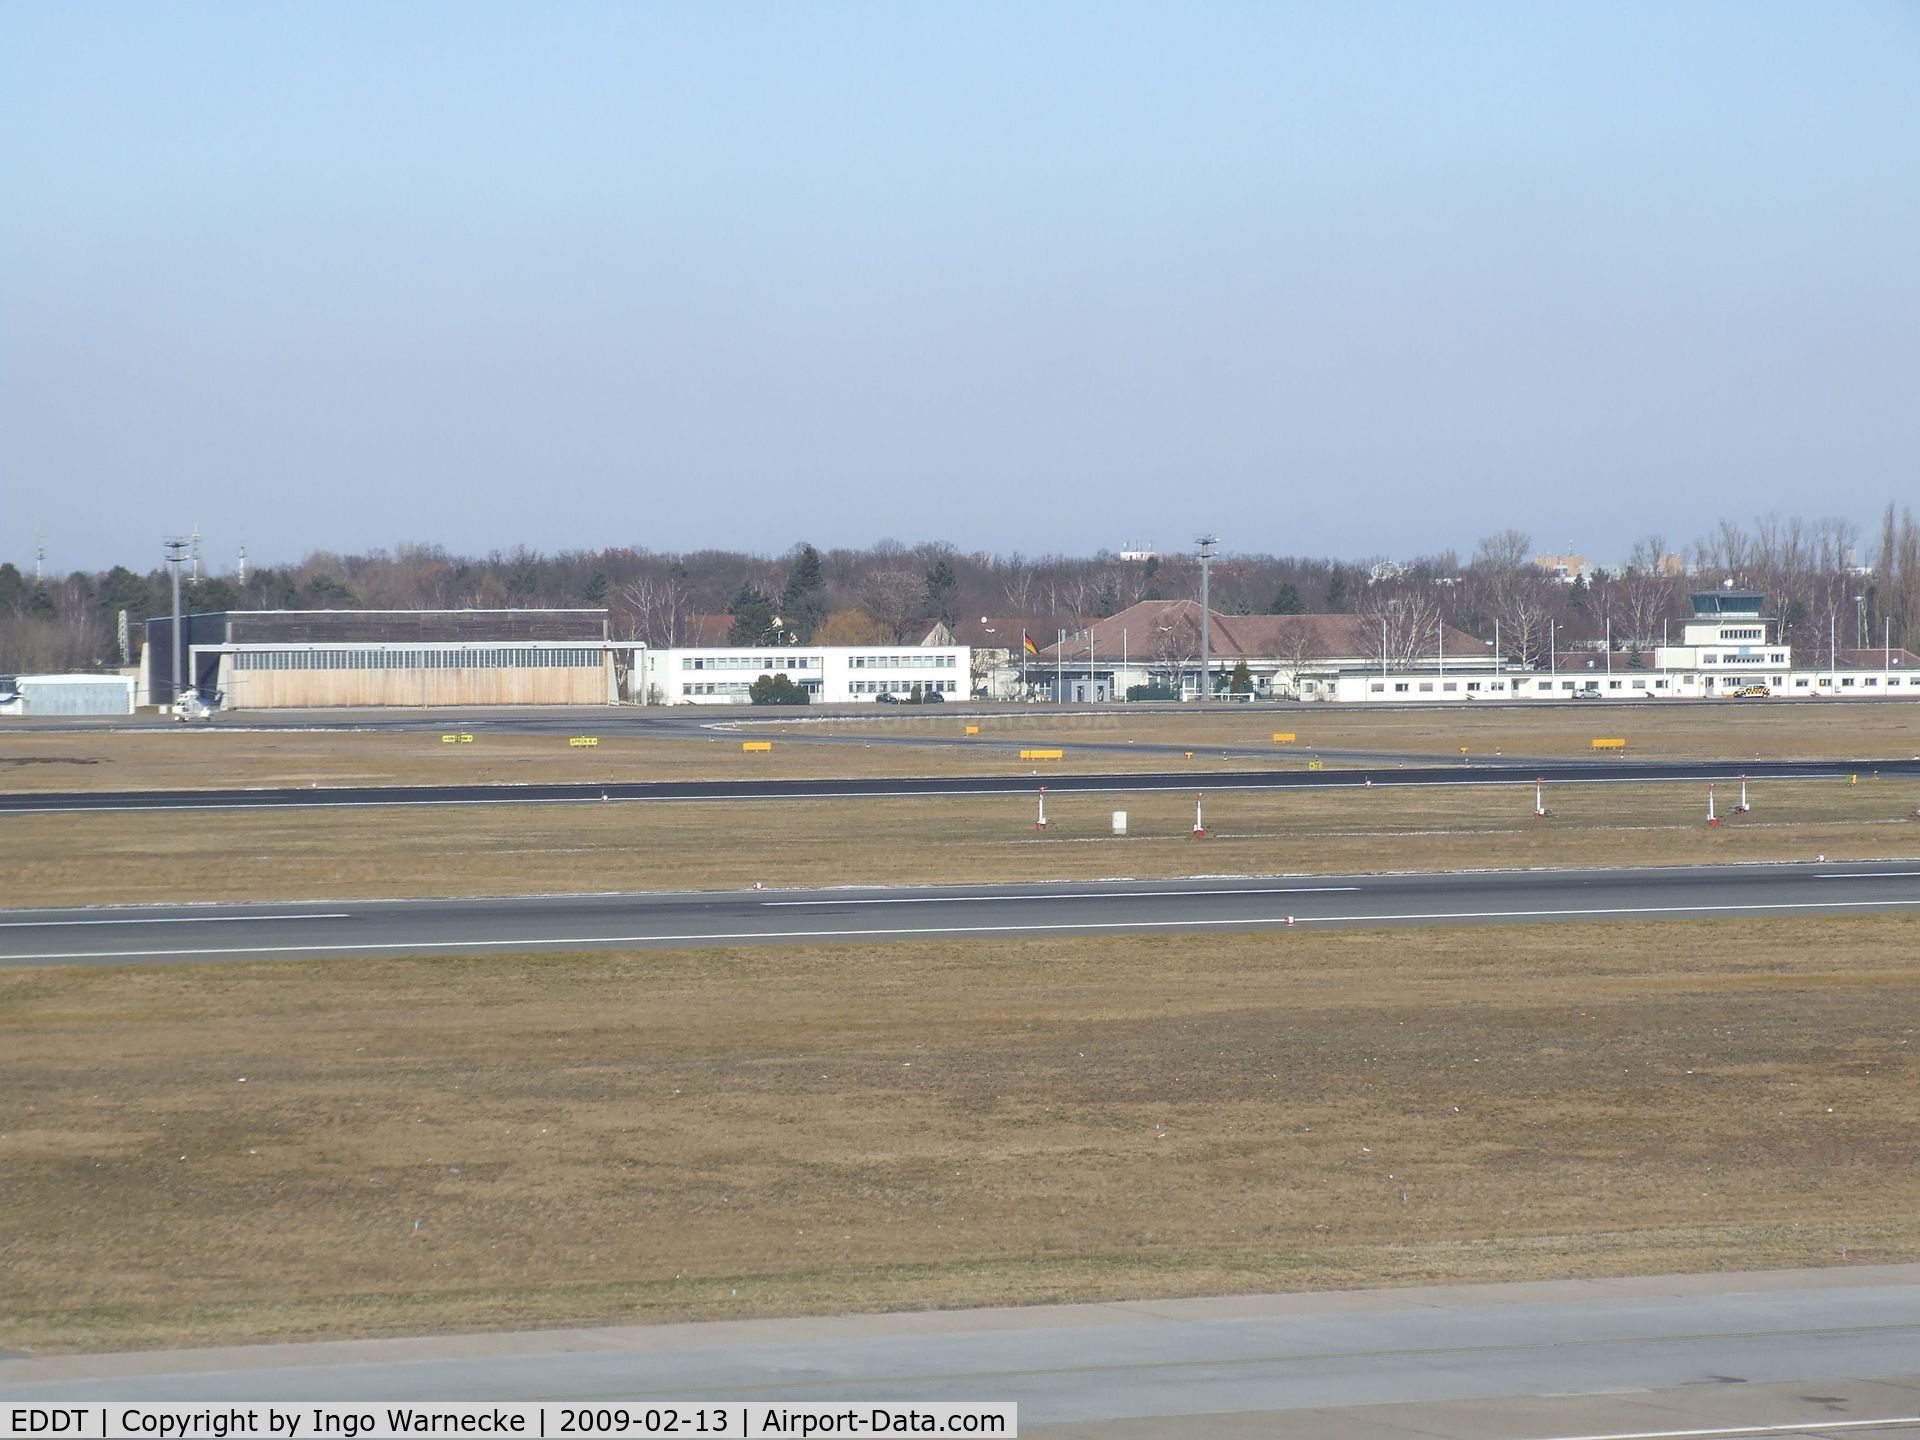 Tegel International Airport (closing in 2011), Berlin Germany (EDDT) - Berlin Tegel - military part, hangar and tower building